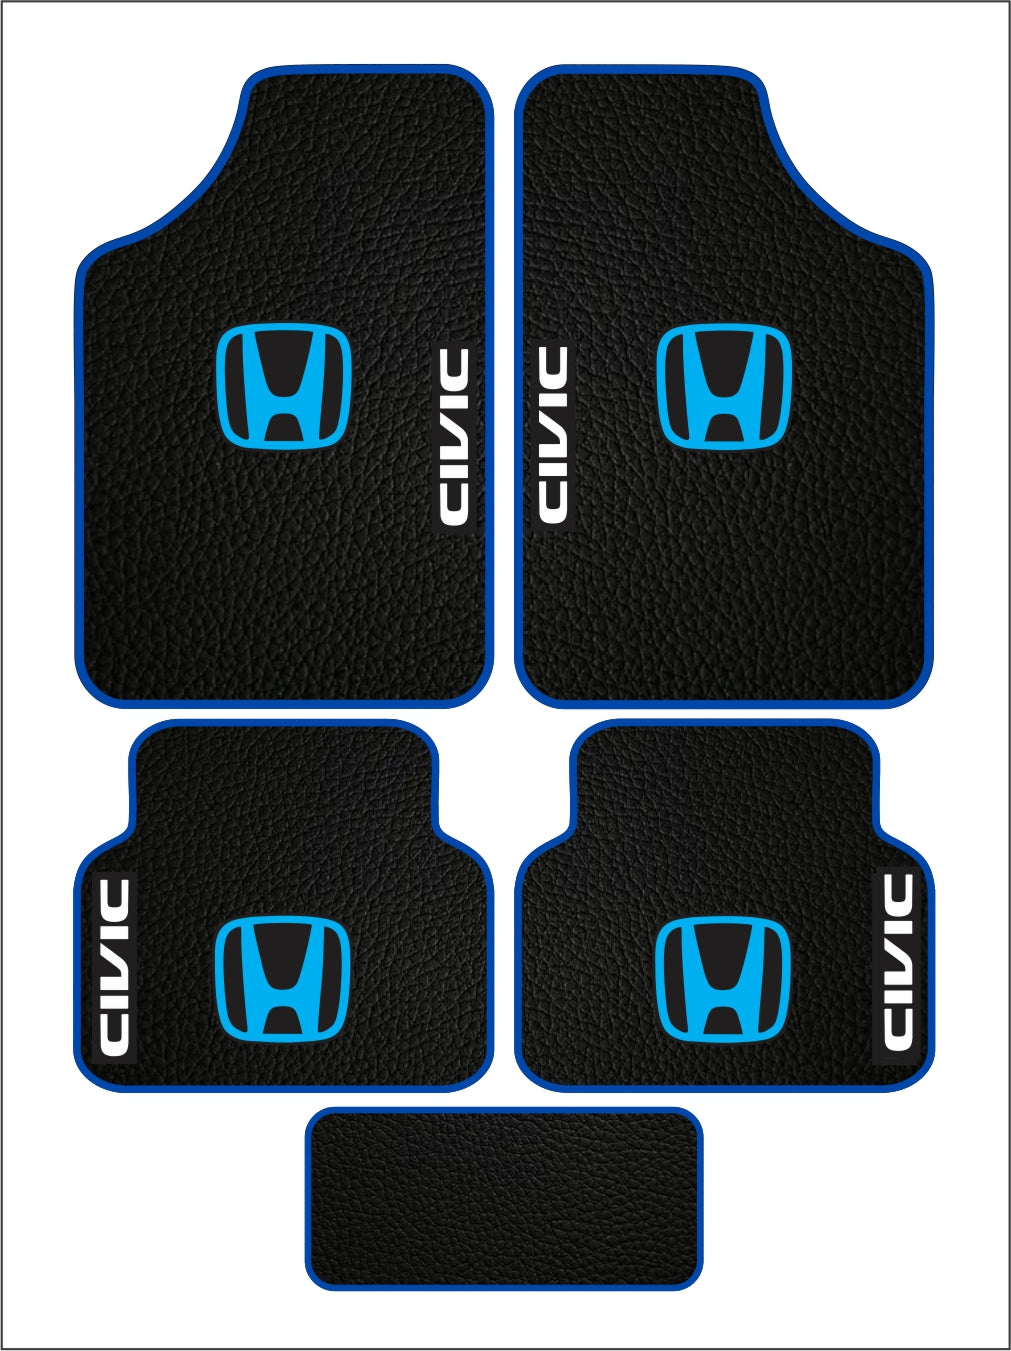 Honda Civic Universal PVC Leather Floor Mats Set of 5